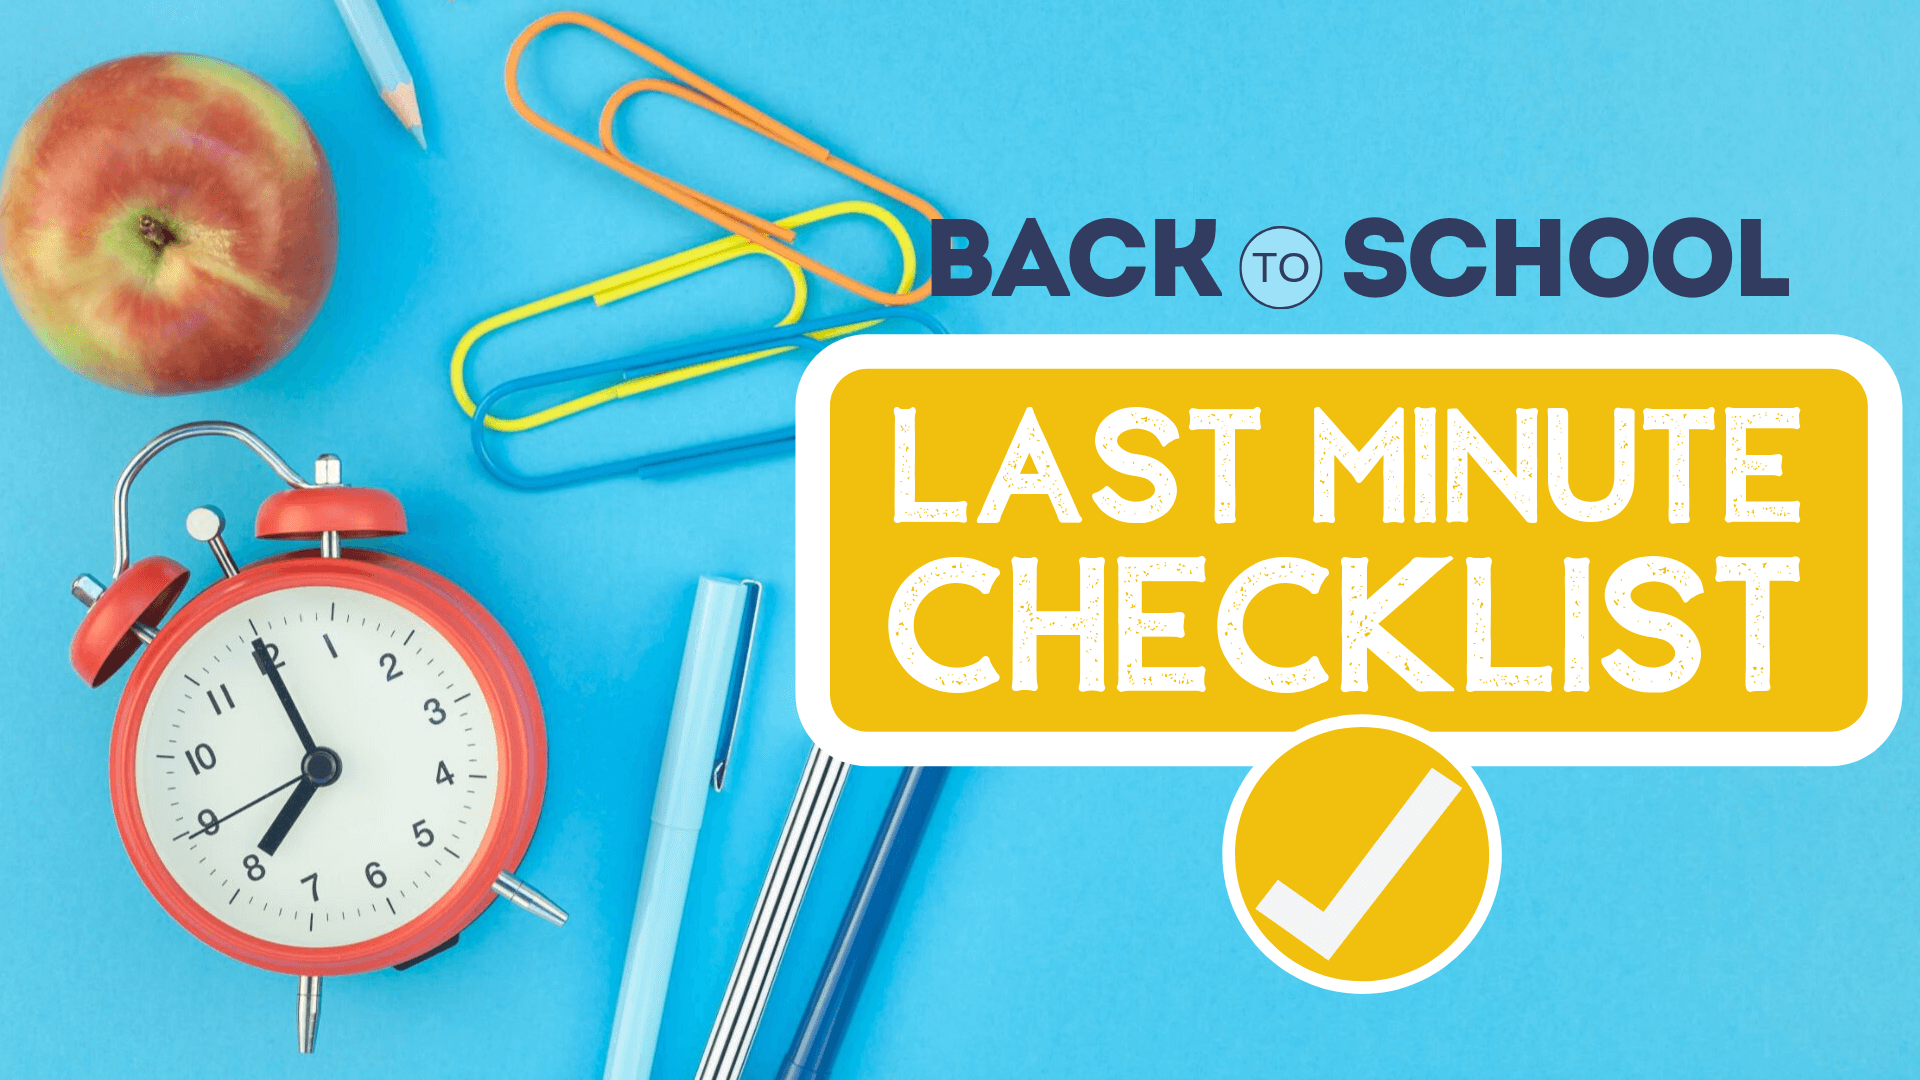 Last minute checklist header